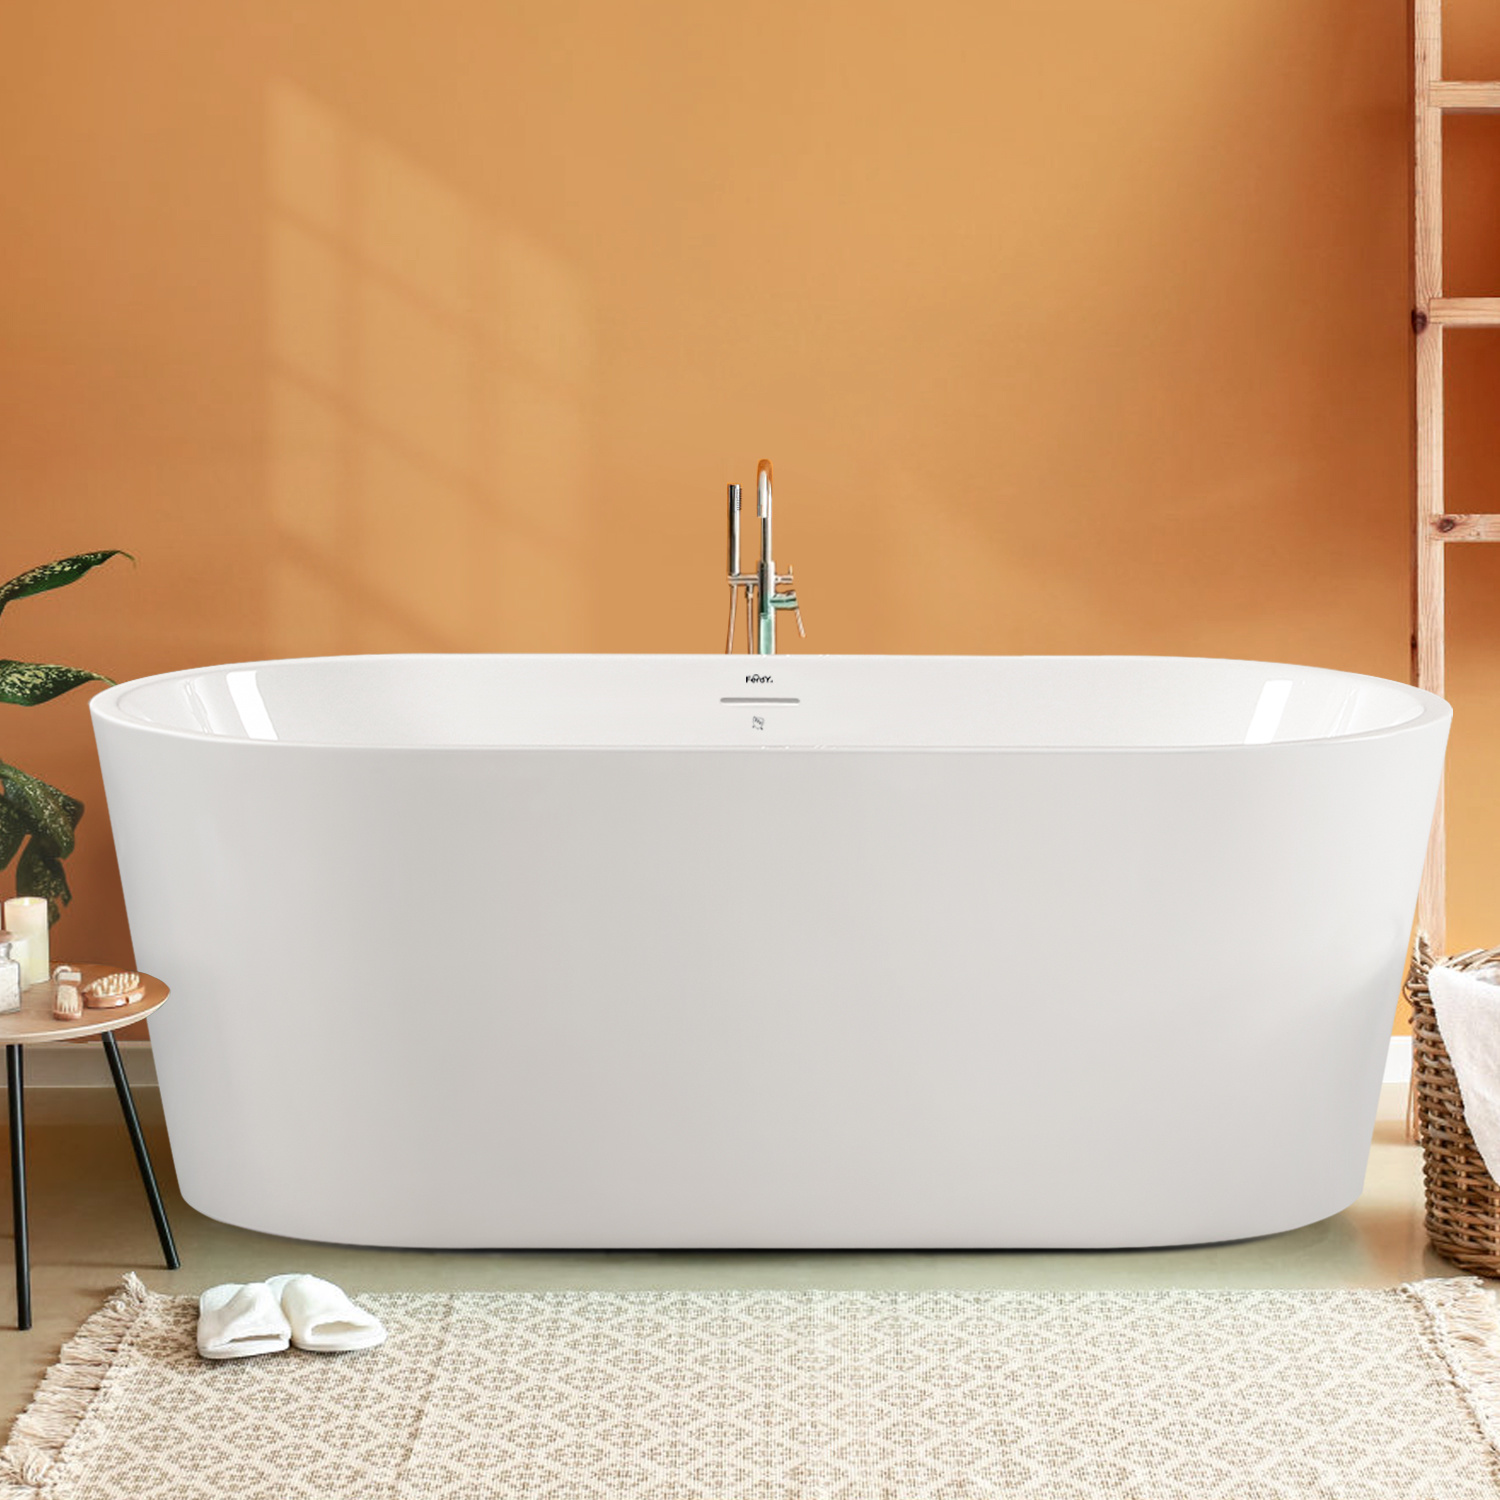 59 inch Acrylic Freestanding Bathtub, Small Classic Oval Shape Acrylic Soaking Bathtub with Brushed Nickel Drain & Minimalist Linear Design Overflow-CASAINC